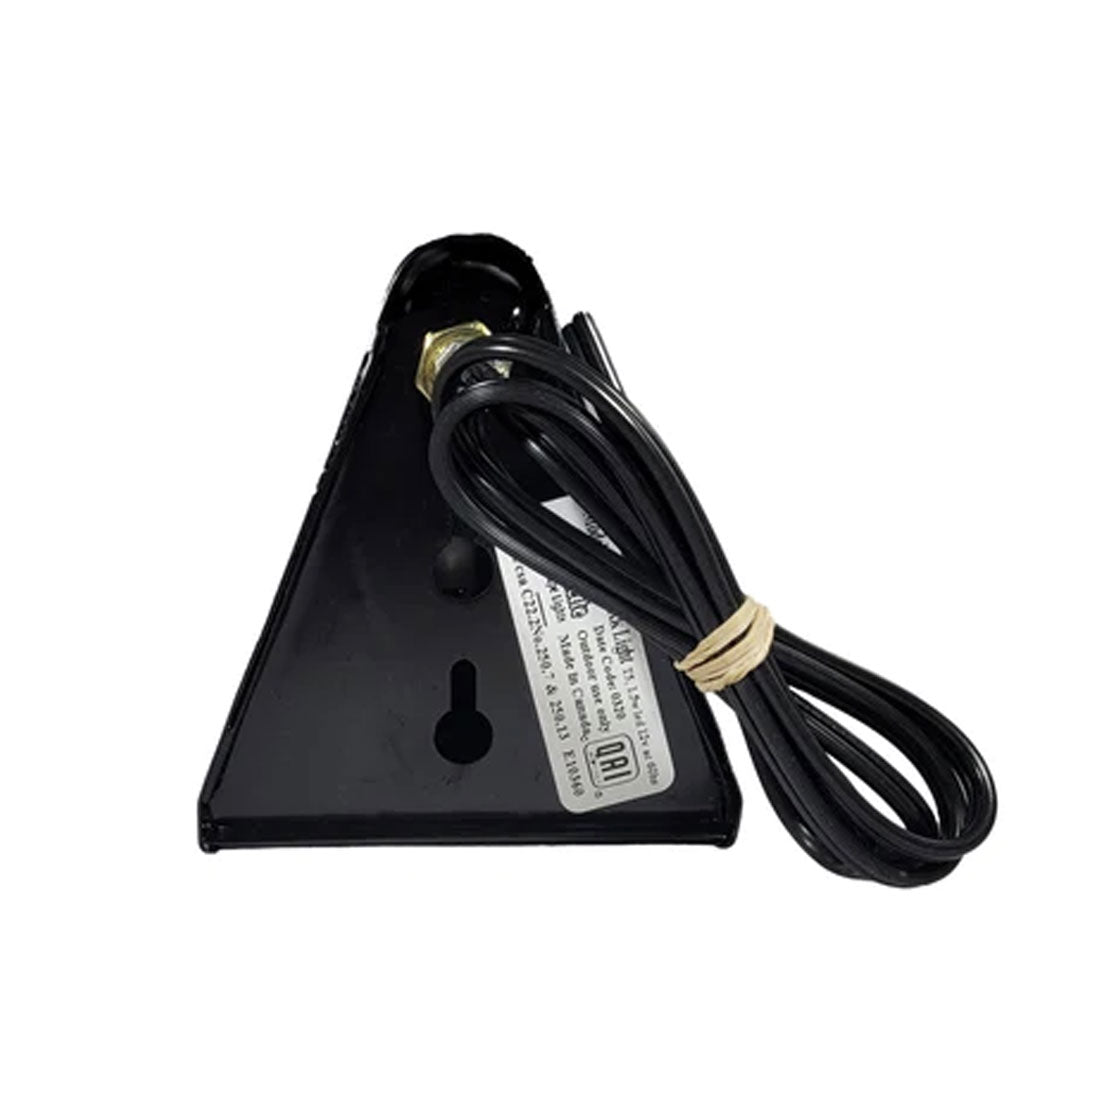 SIlhouette Lights DL308B Triangular LED Deck Light - Black